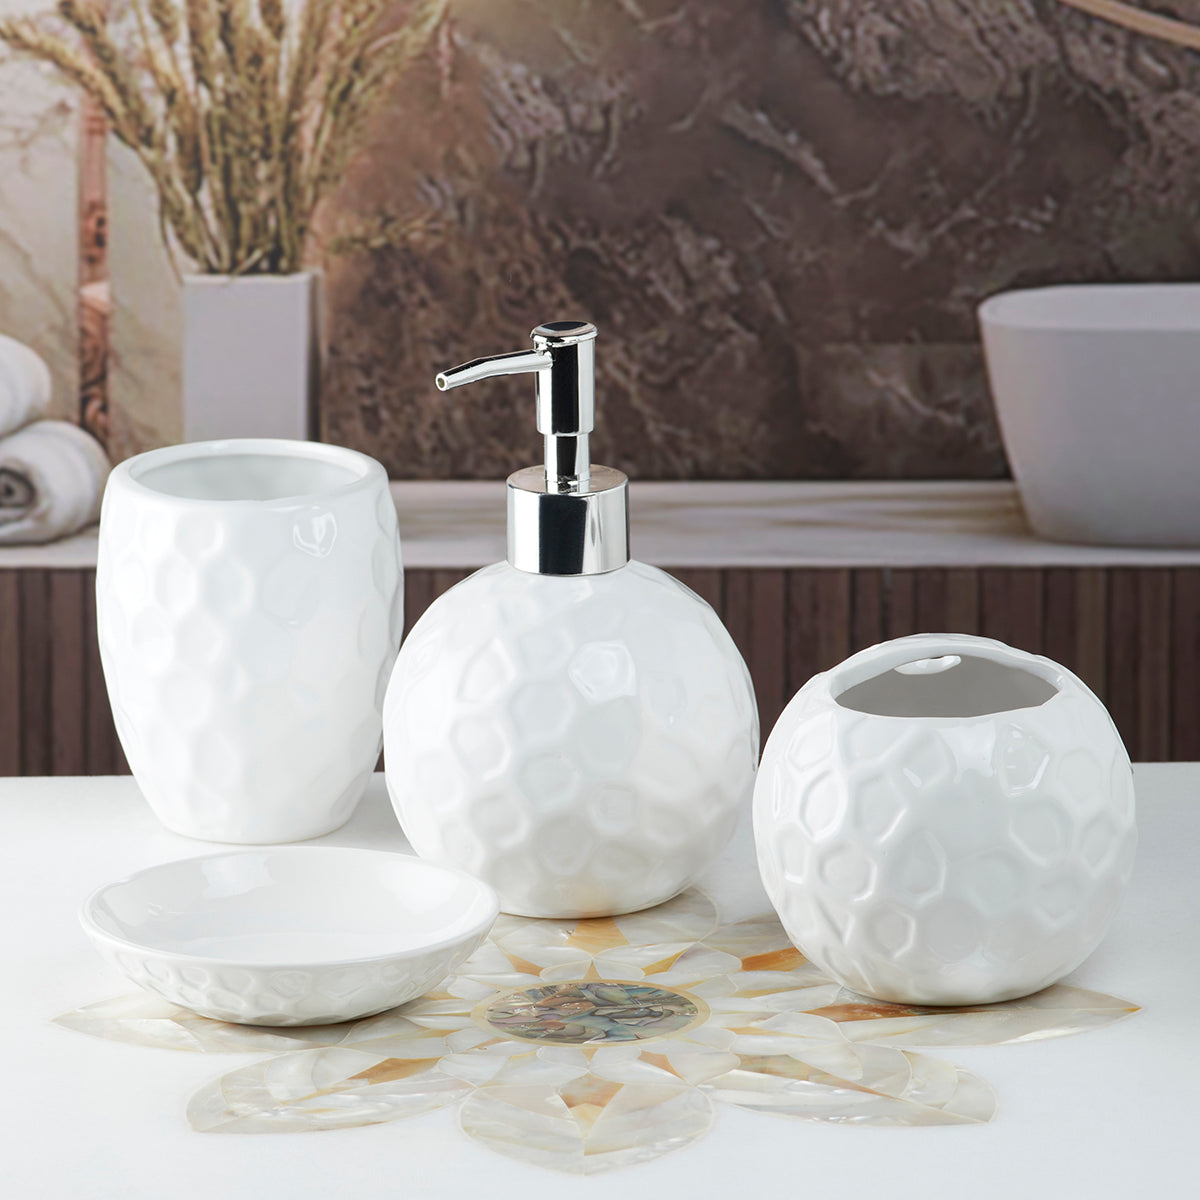 Ceramic Bathroom Accessories Set of 4 Bath Set with Soap Dispenser (10117)